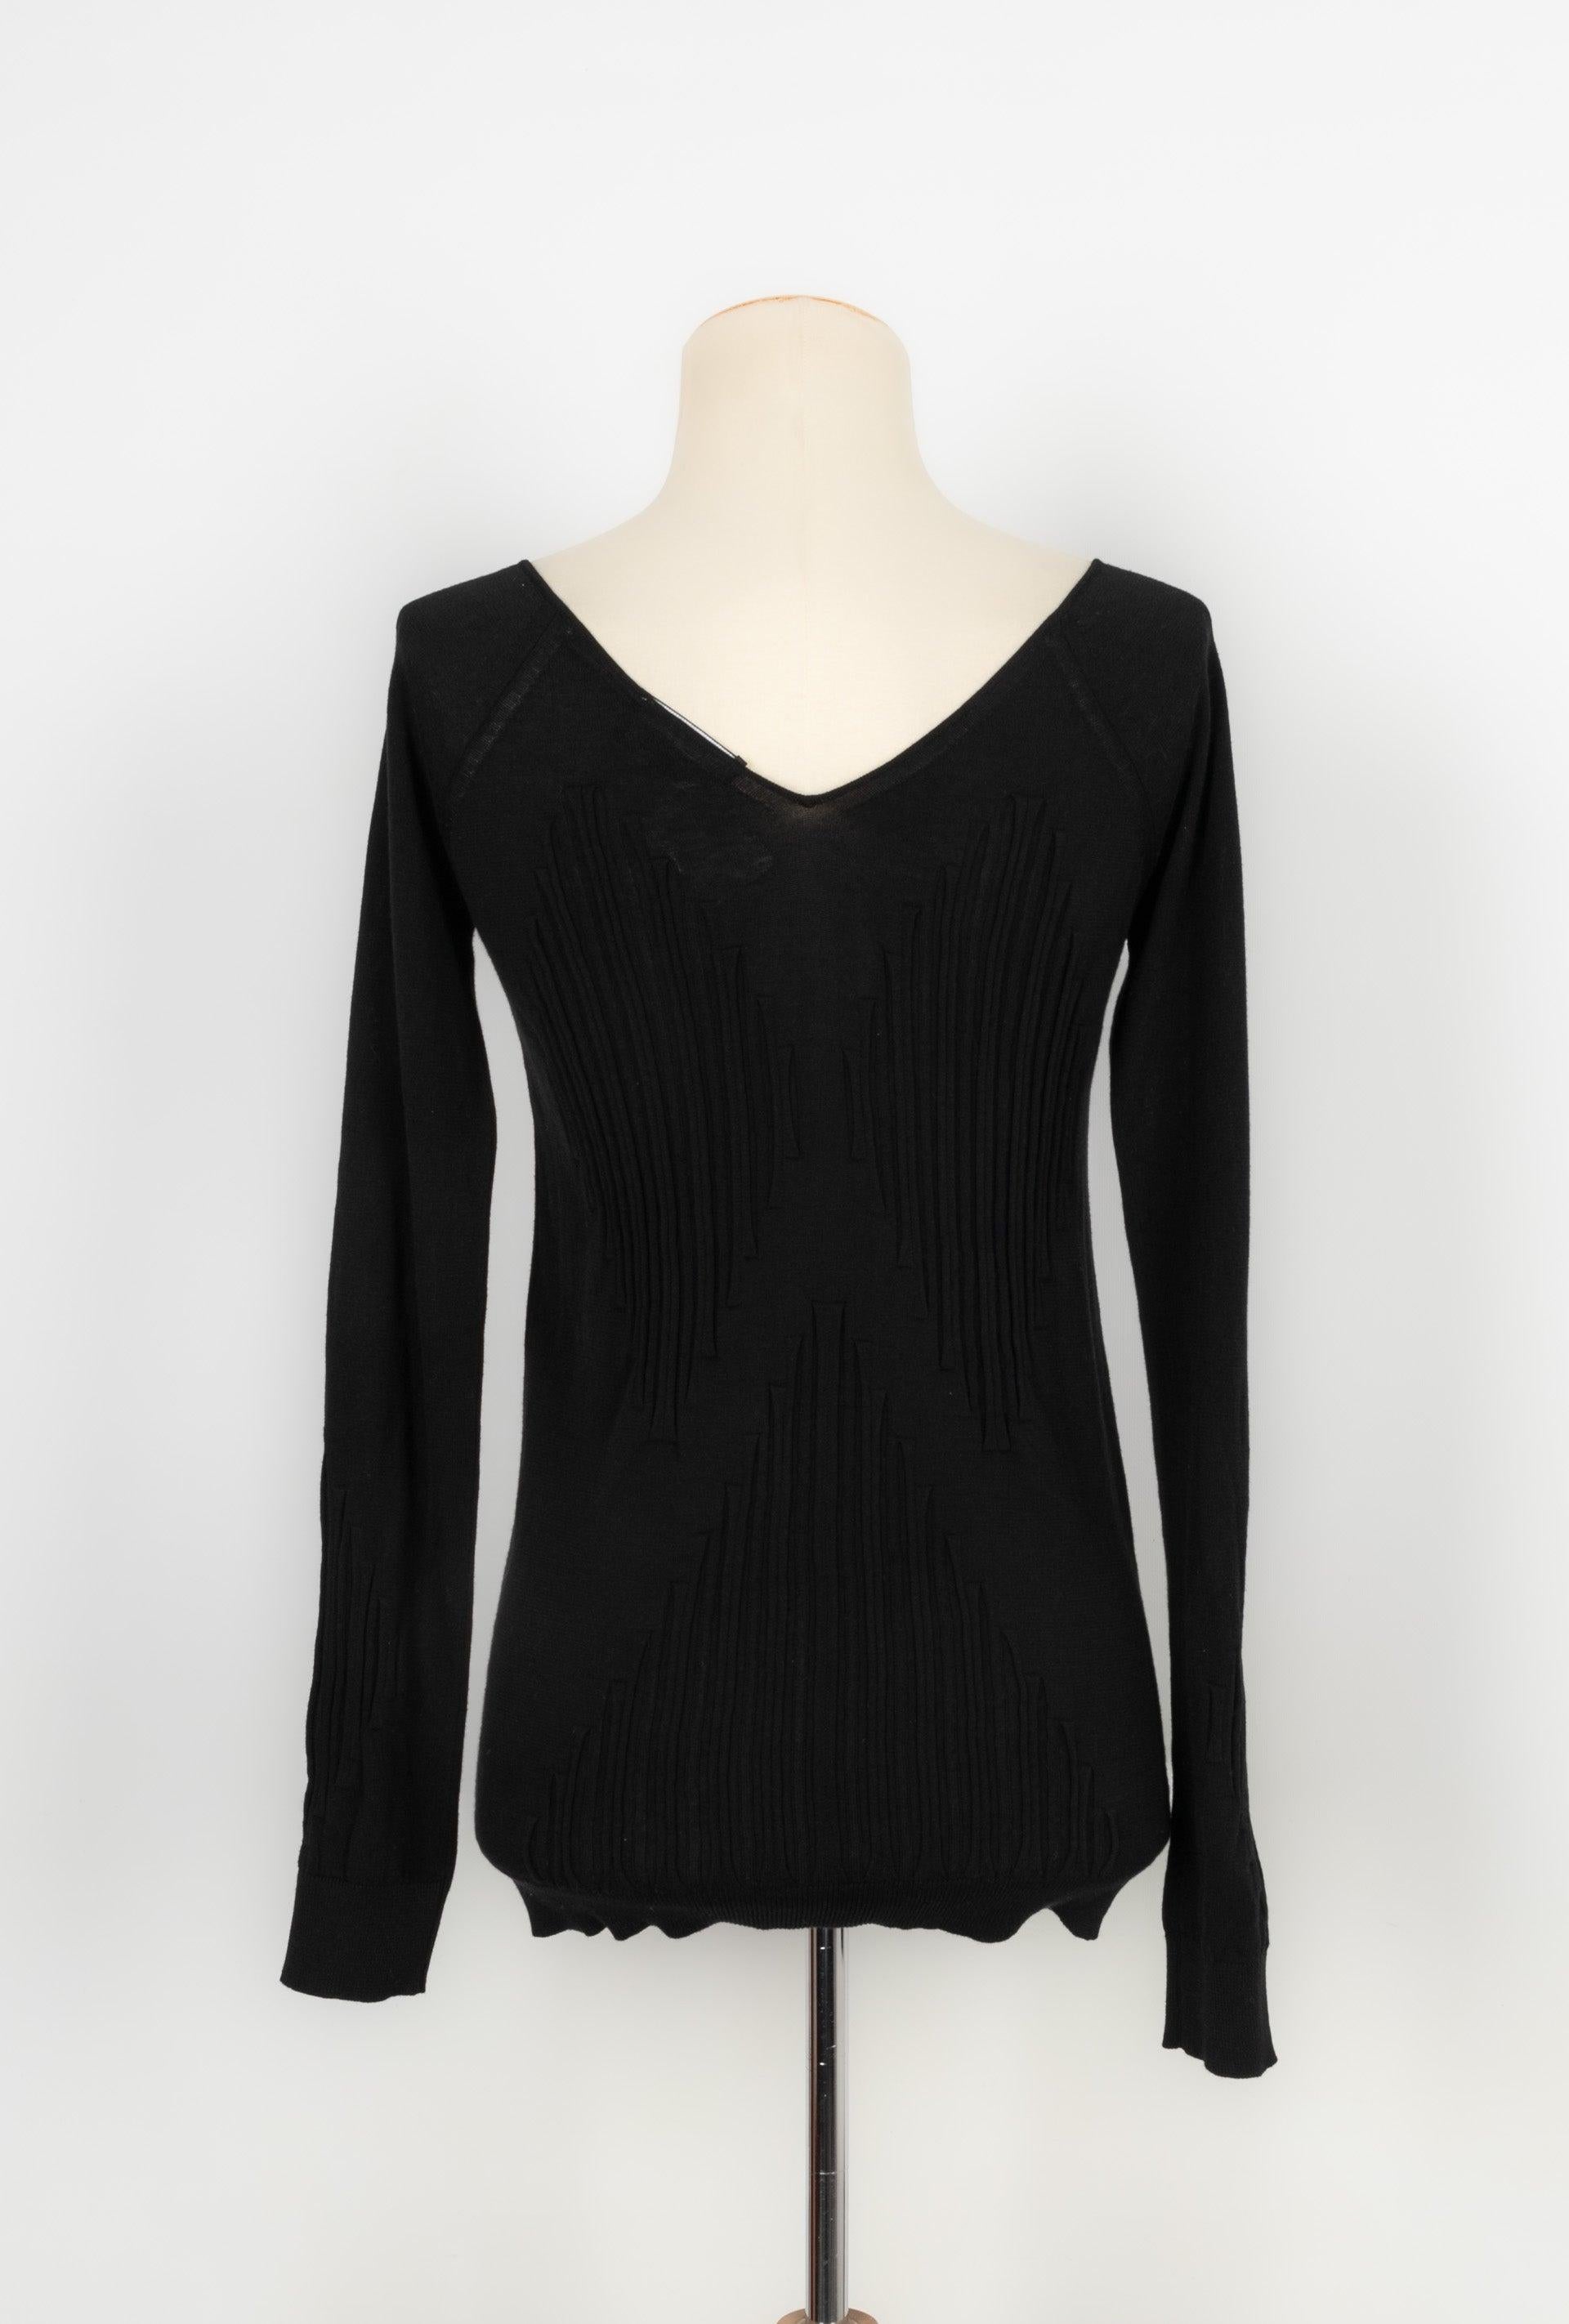 Chanel Black Cotton Long-sleeved Top In Excellent Condition For Sale In SAINT-OUEN-SUR-SEINE, FR